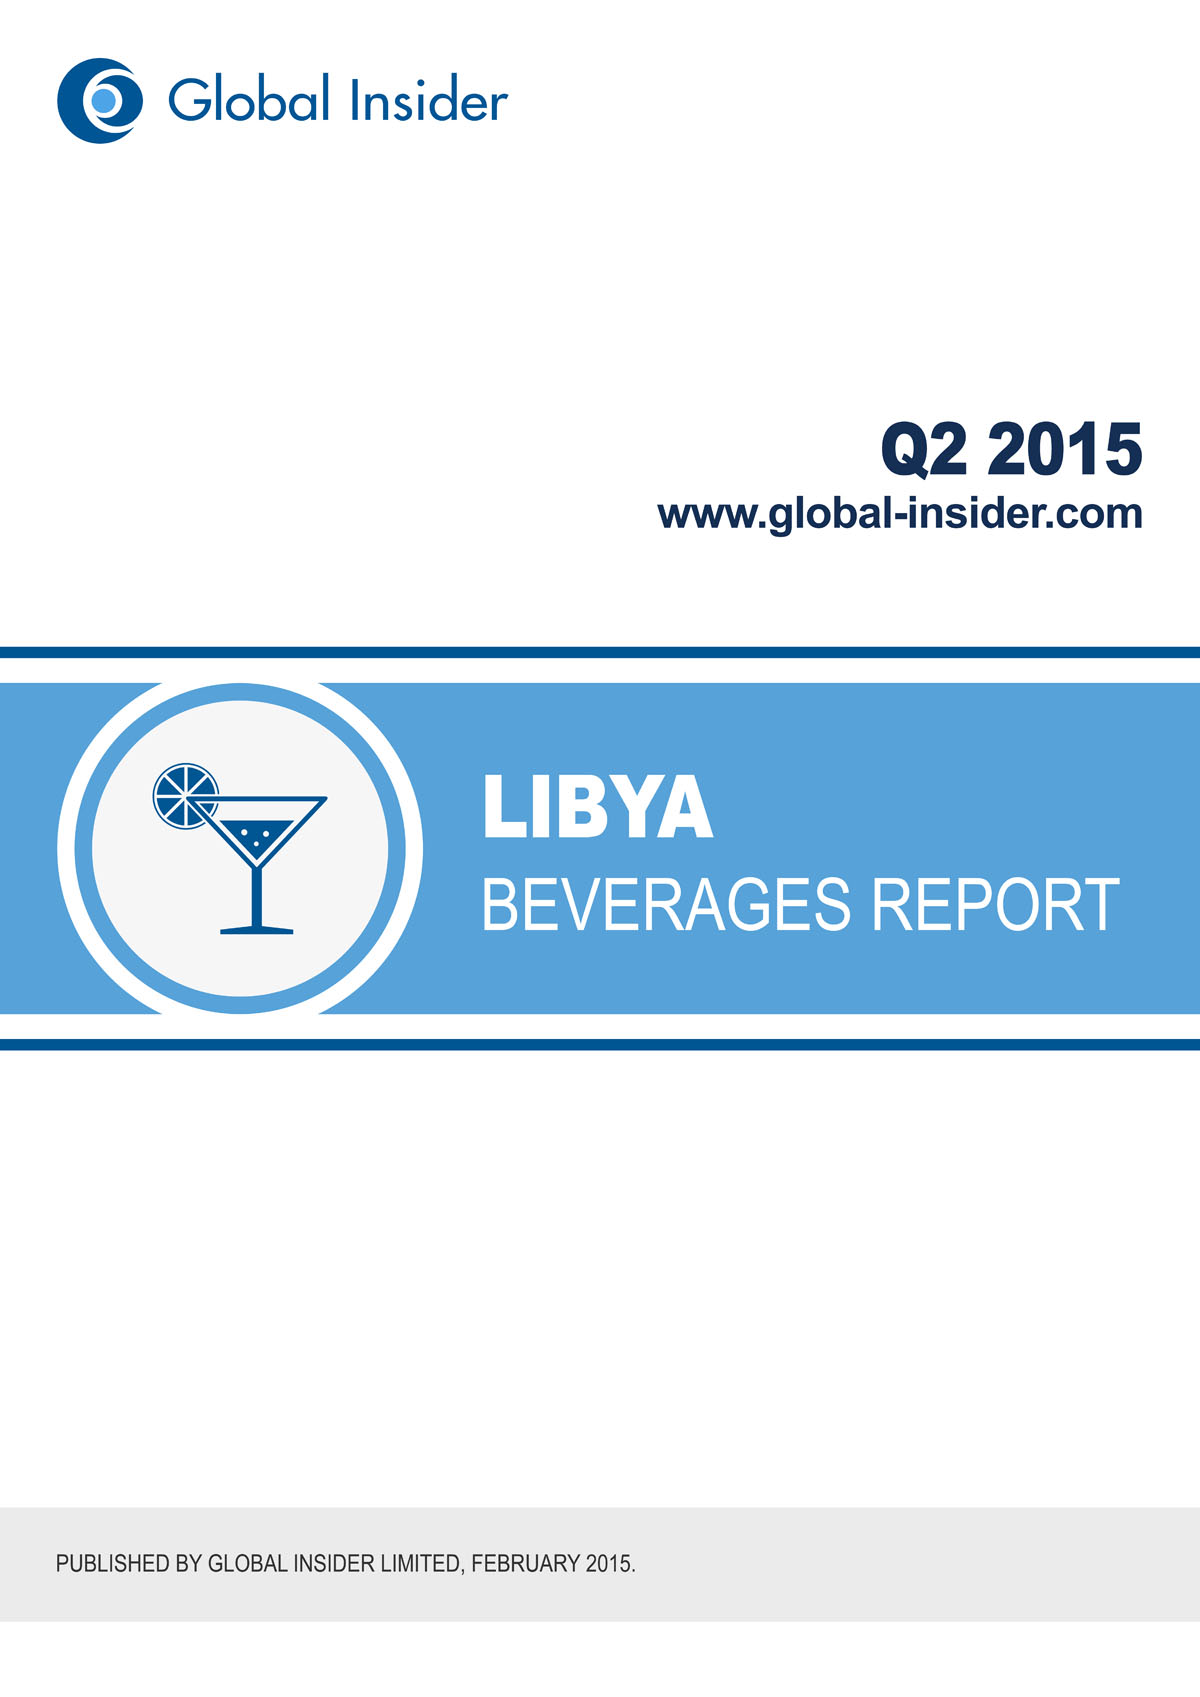 Libya Beverages Report